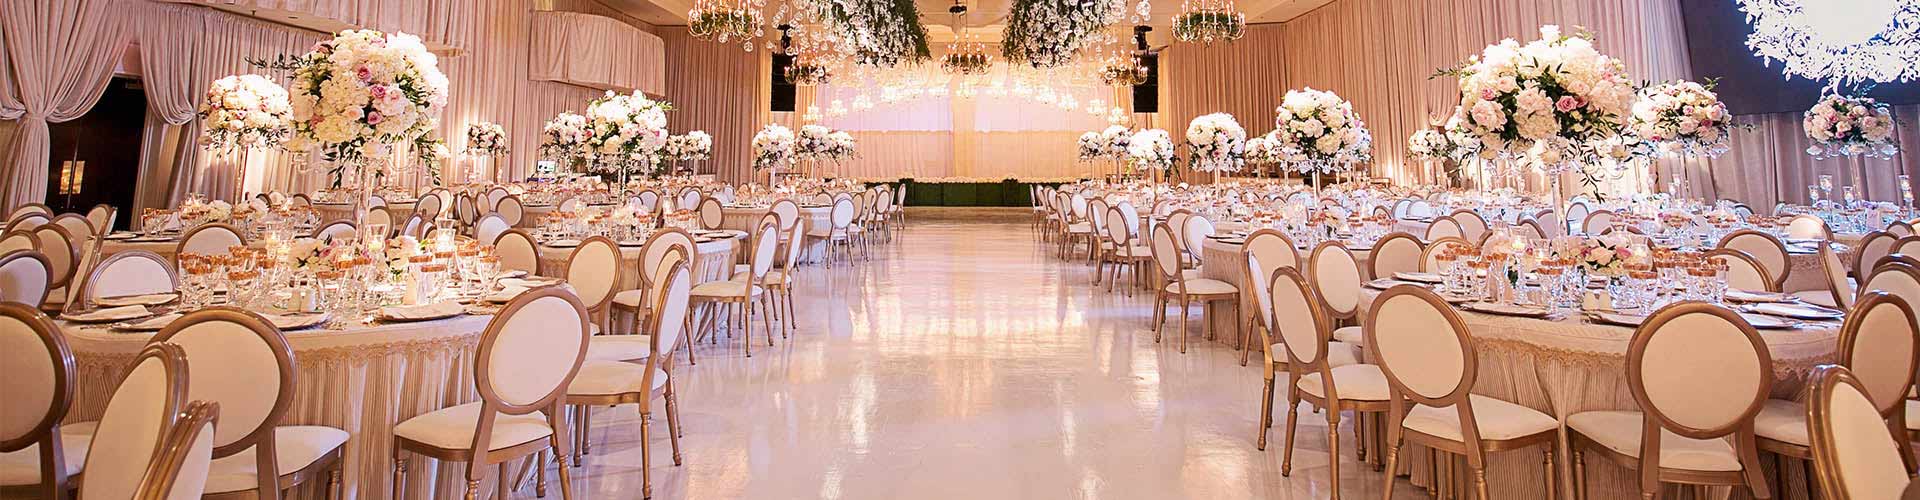 Carmen S Wedding Venue Event Space Hamilton Toronto Area